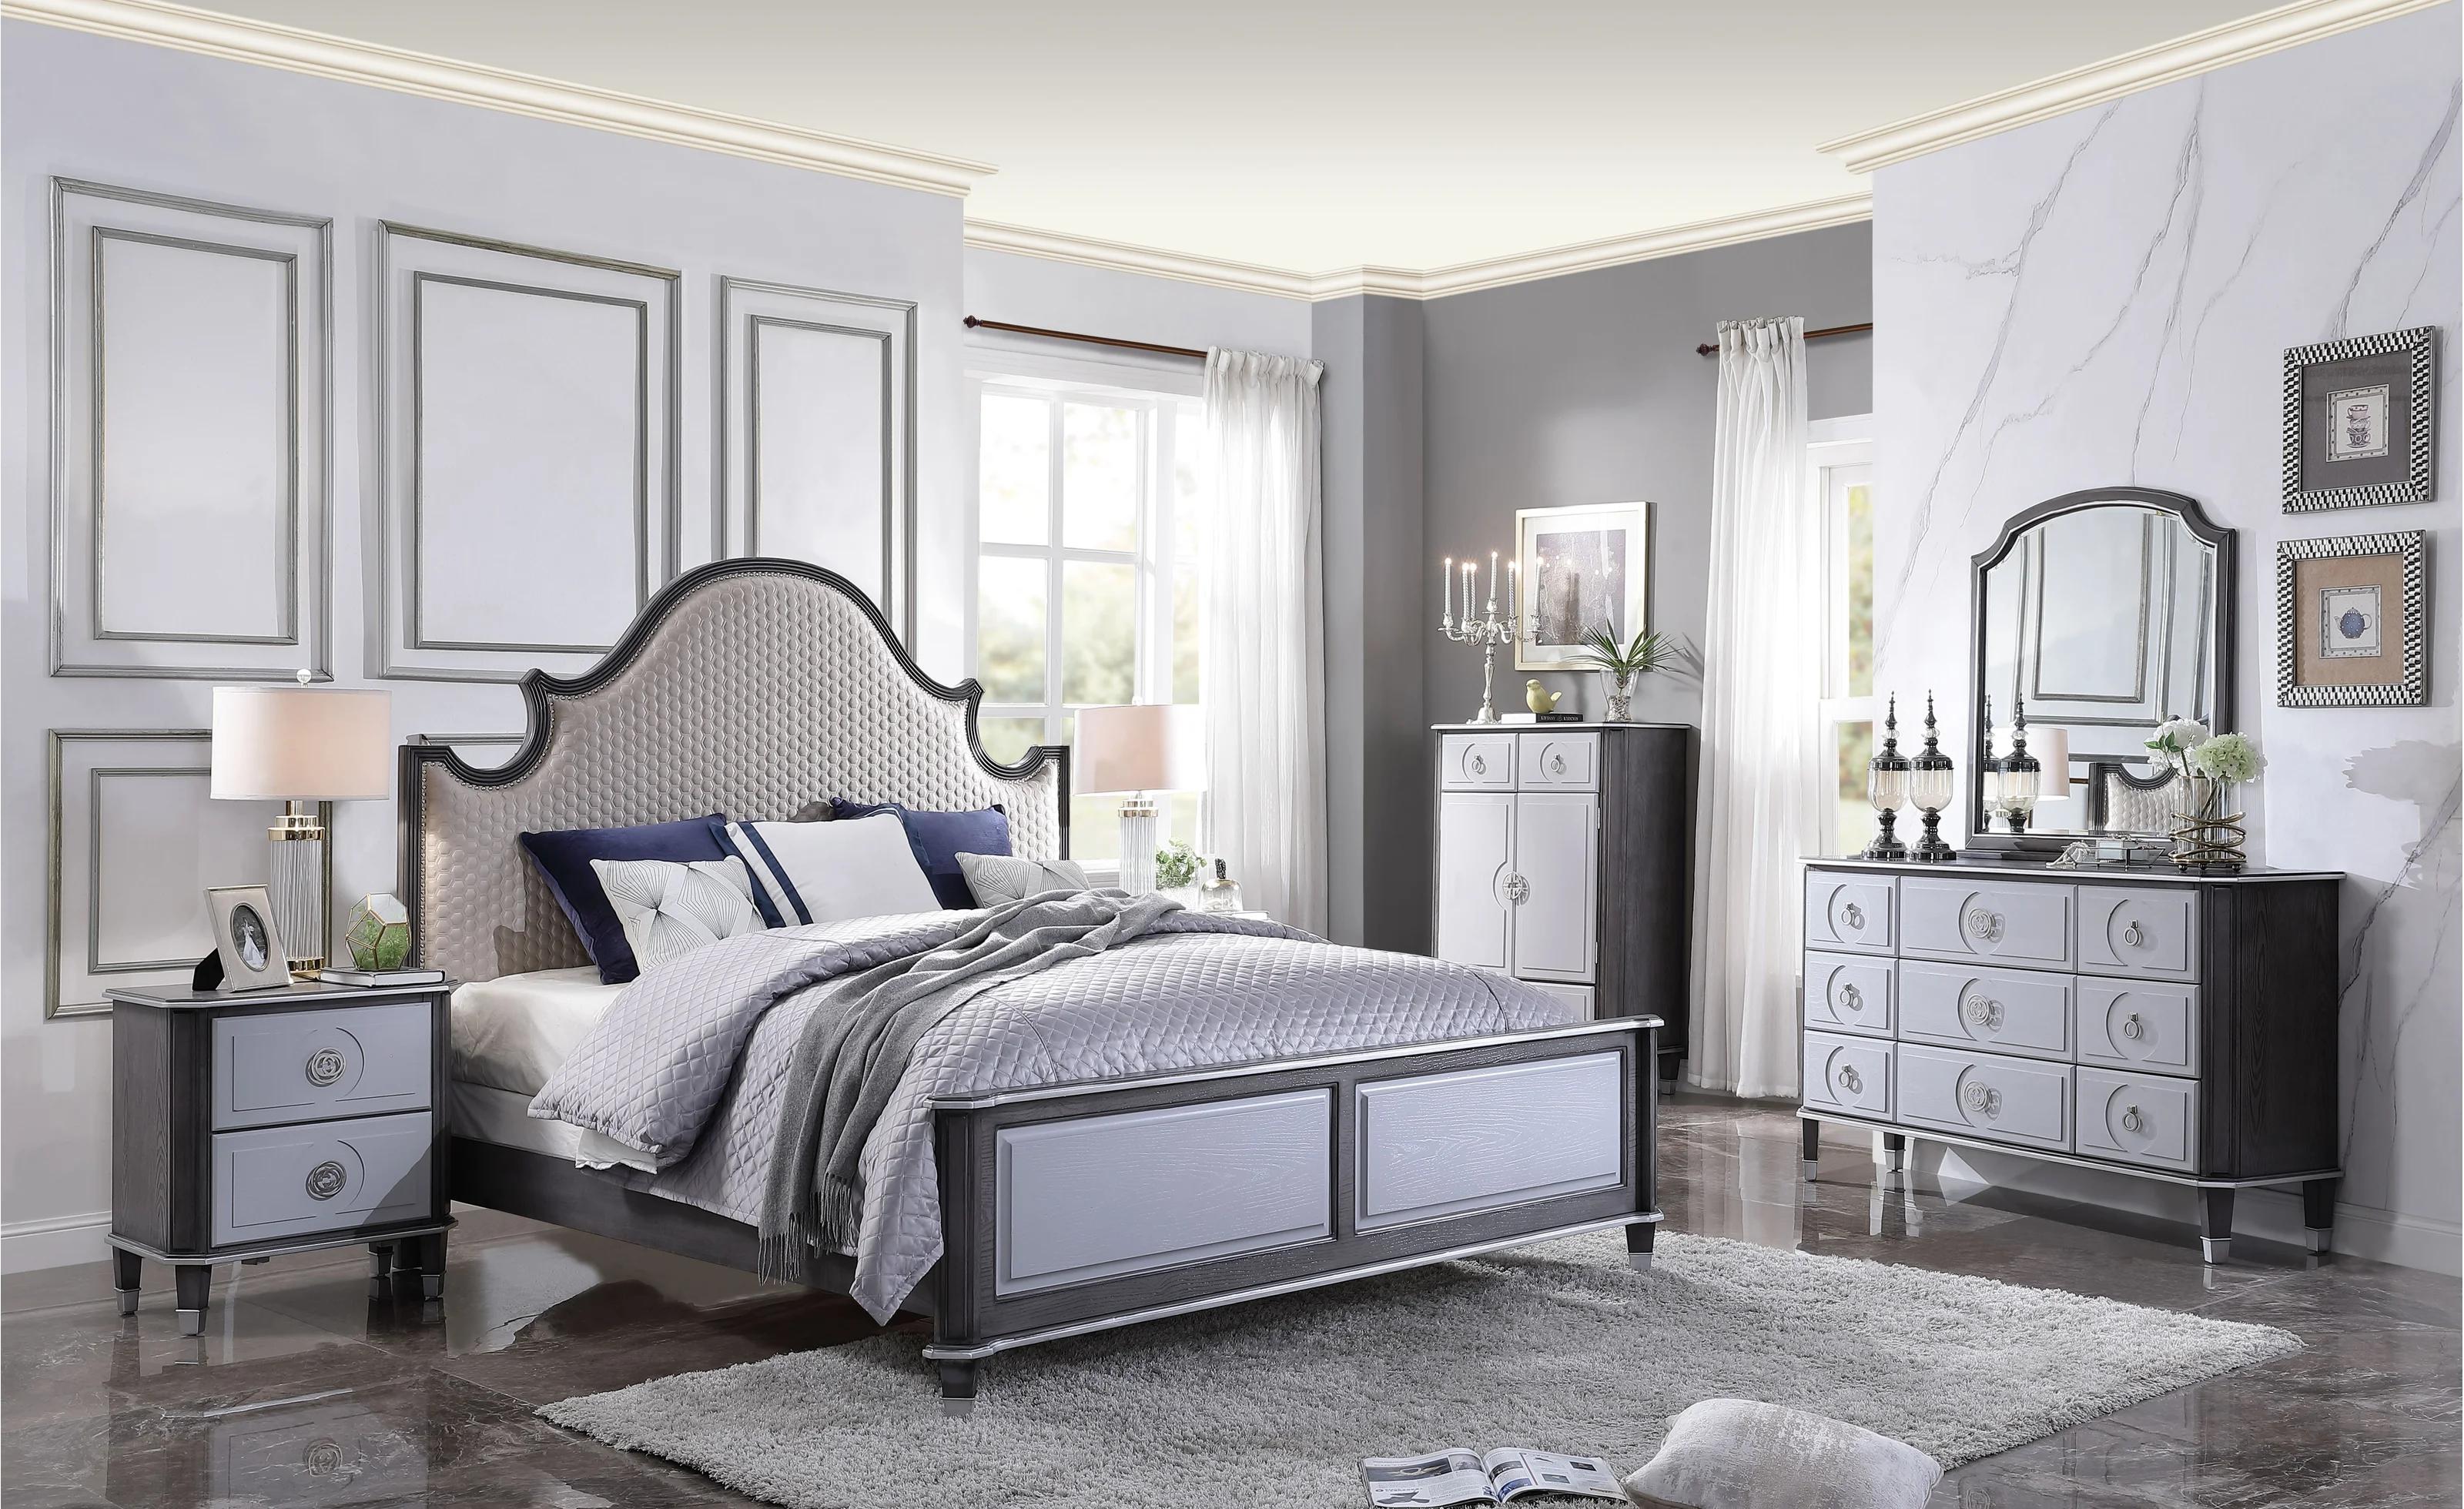 

    
Transitional Beige Queen 3pcs Bedroom Set by Acme House Beatrice 28810Q-3pcs
